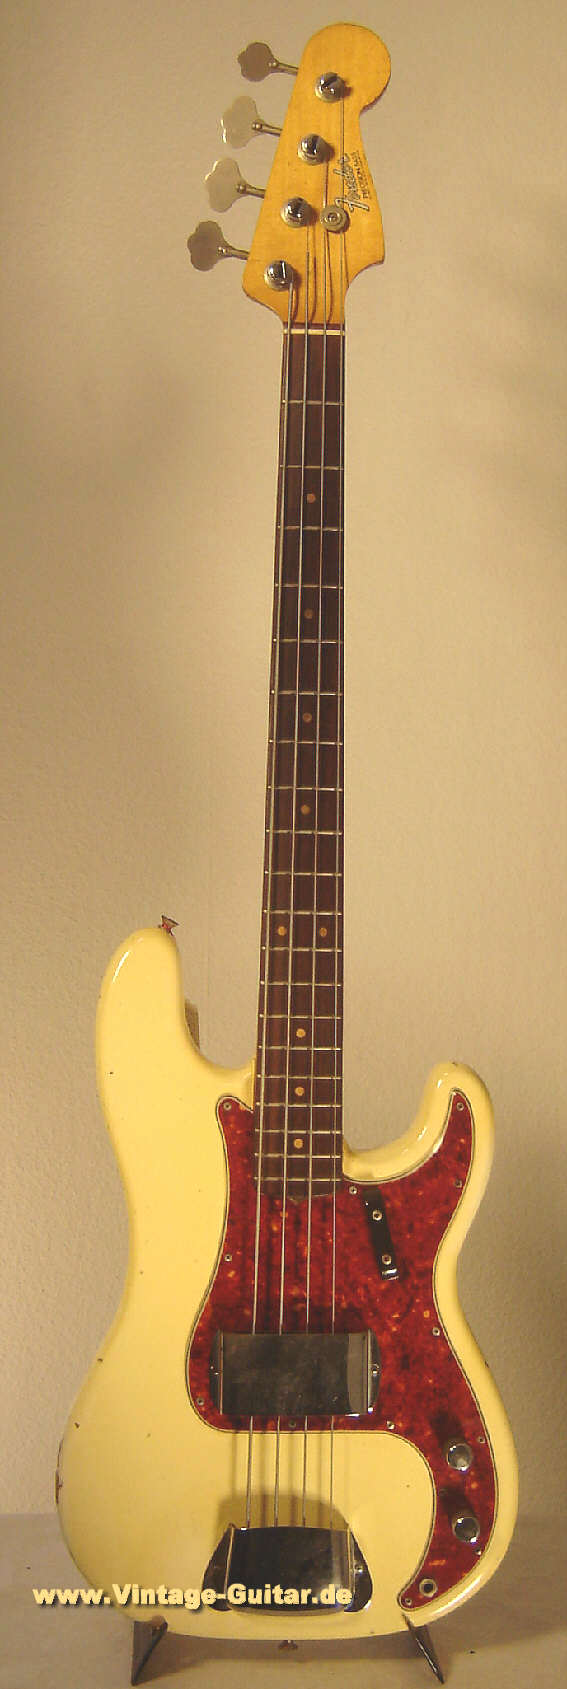 Fender_Precision_Bass_1964-olympic-white-front.jpg